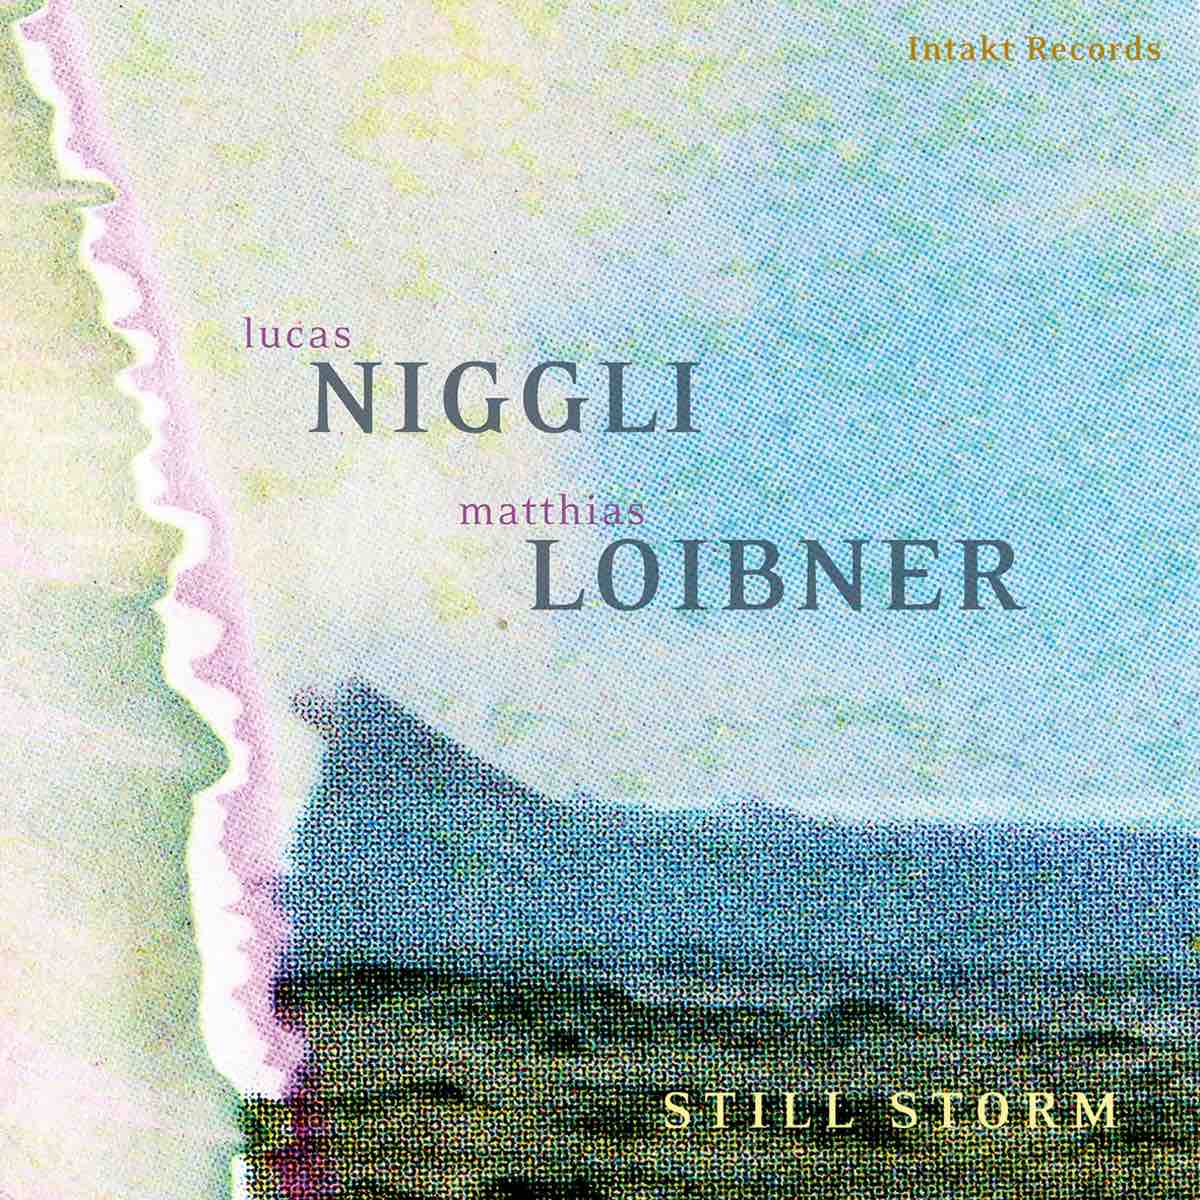 cover Niggli Loibner